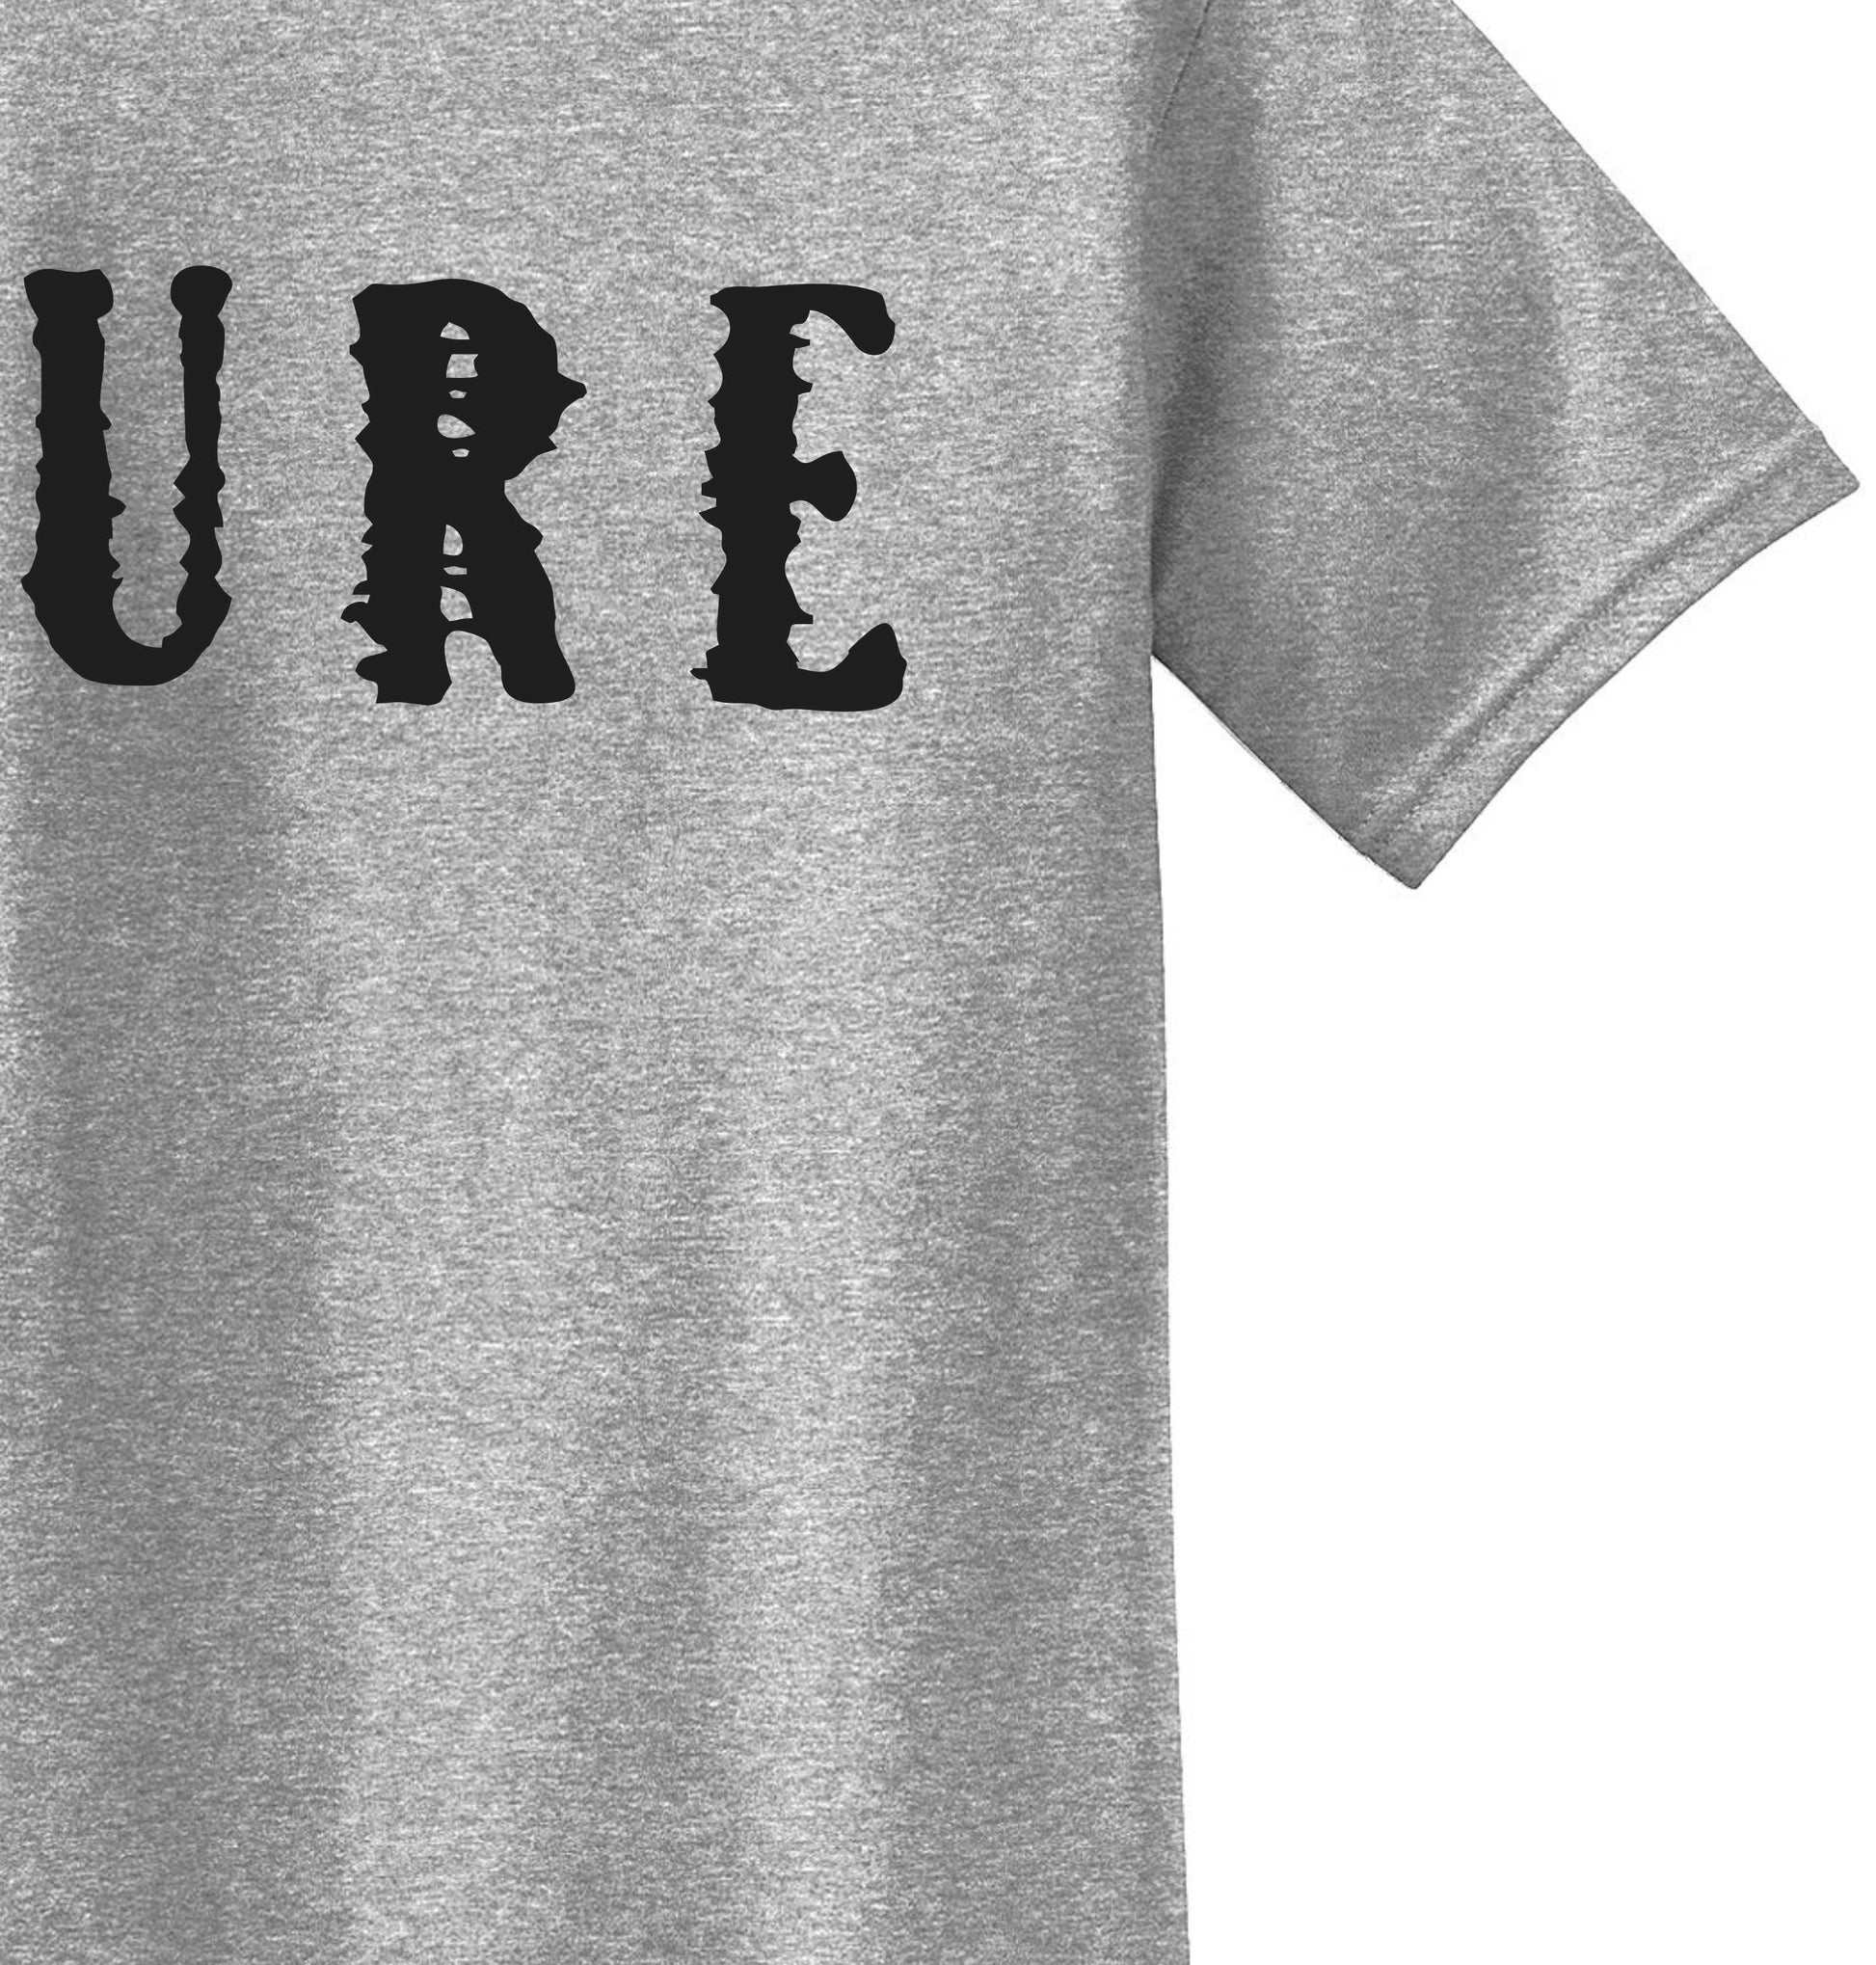 Radical Band  Men's Shirts - The Cure (Gray) - MYSTYLEMYCLOTHING